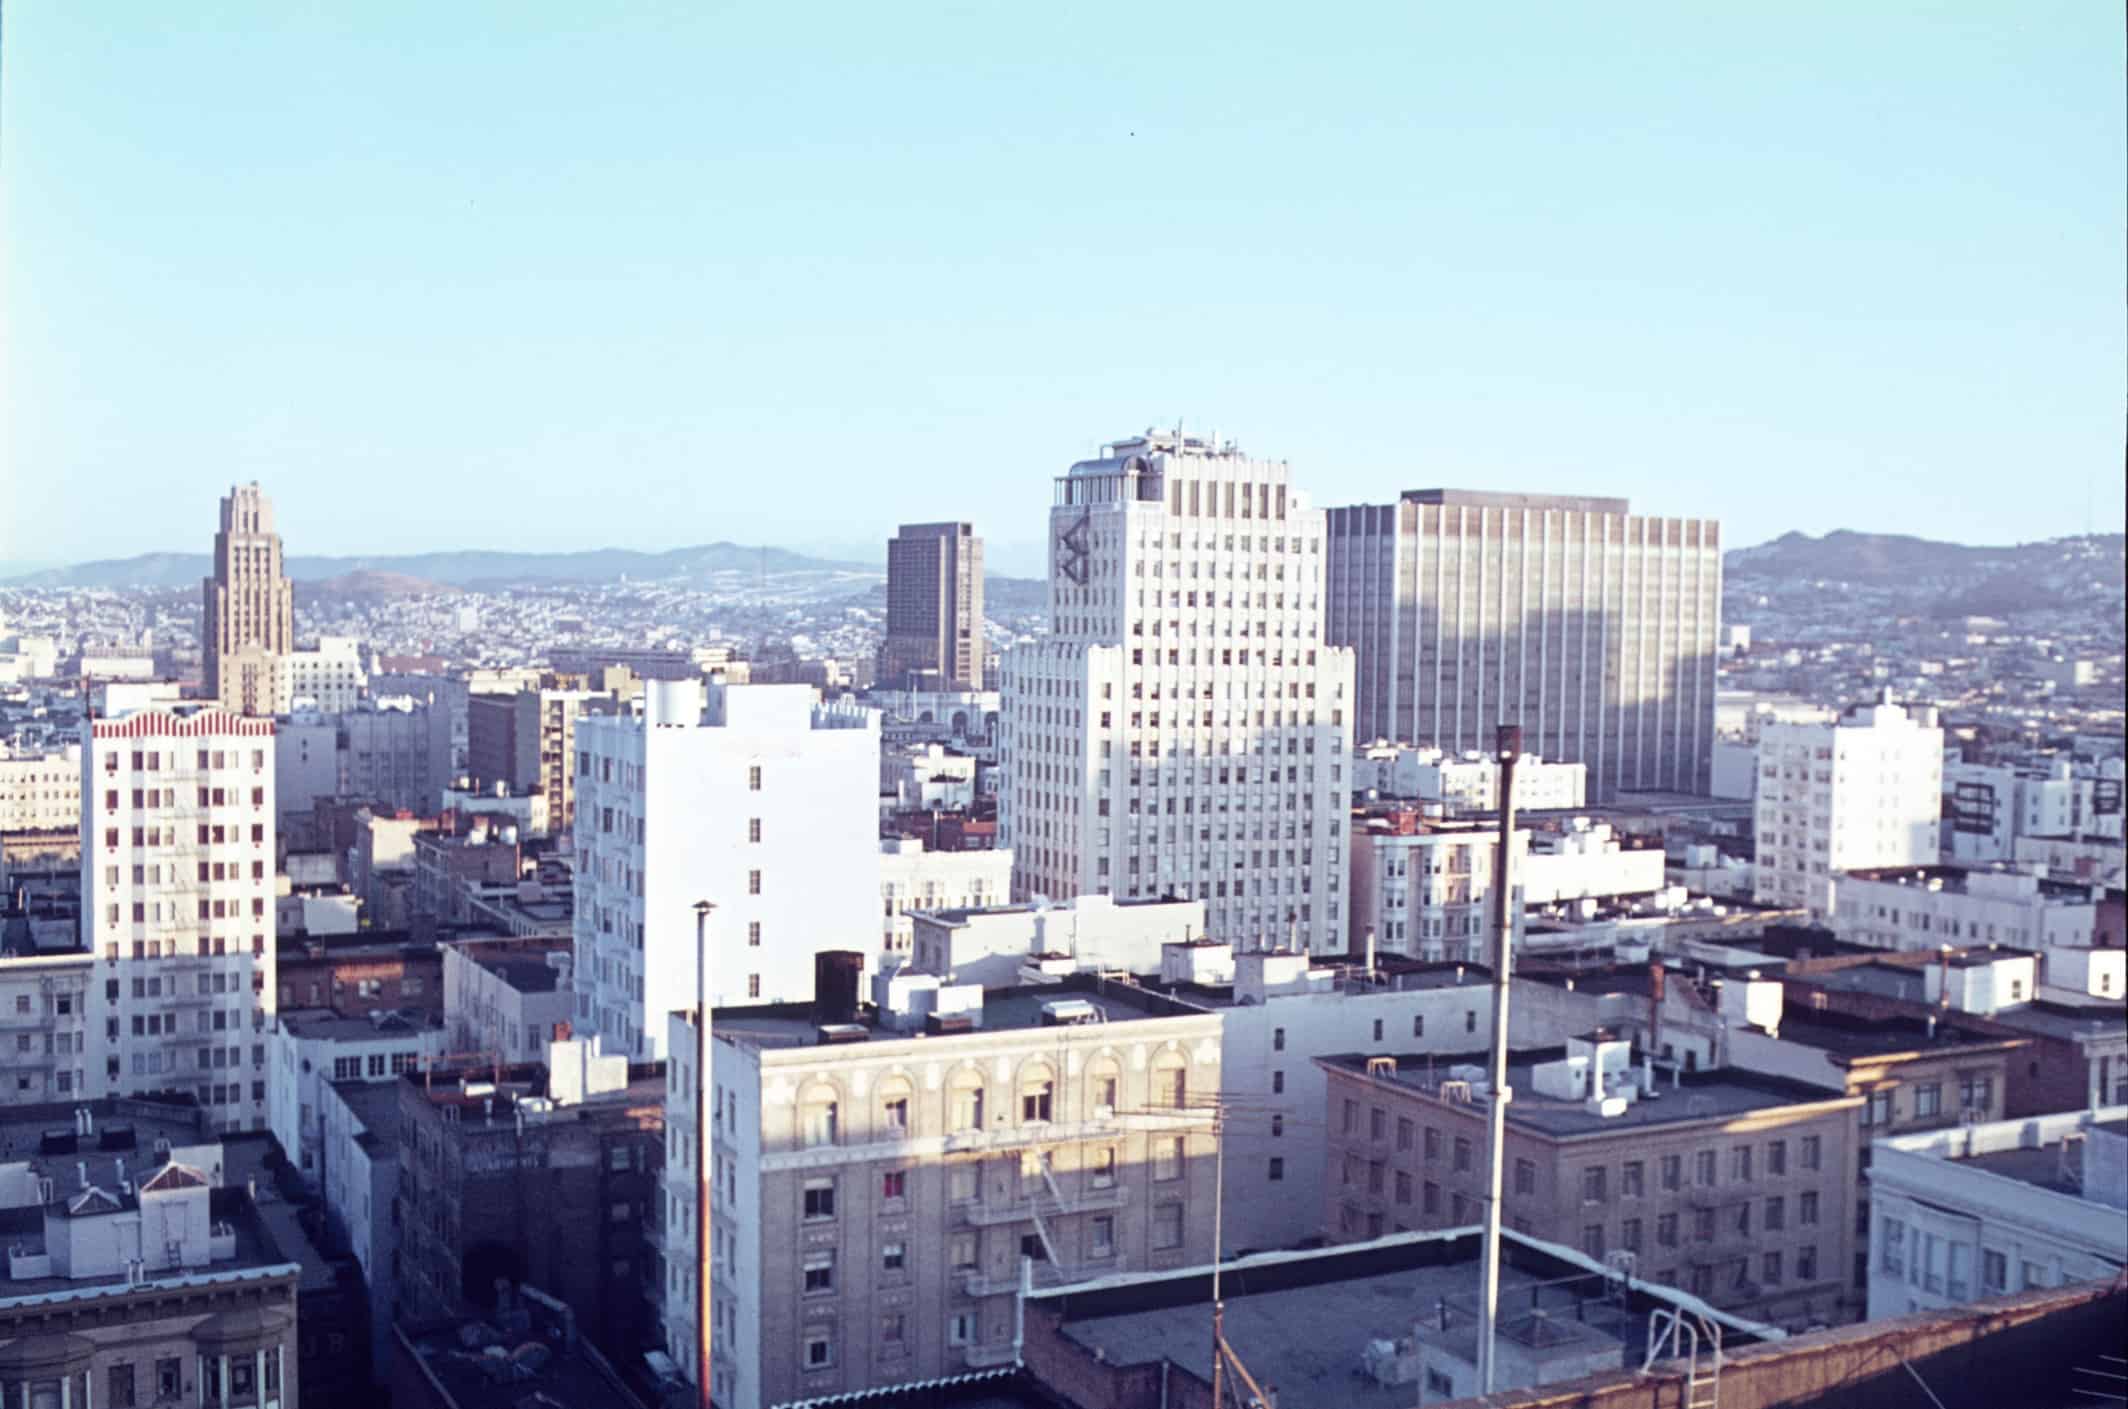 San Francisco, Tenderloin district, 1968